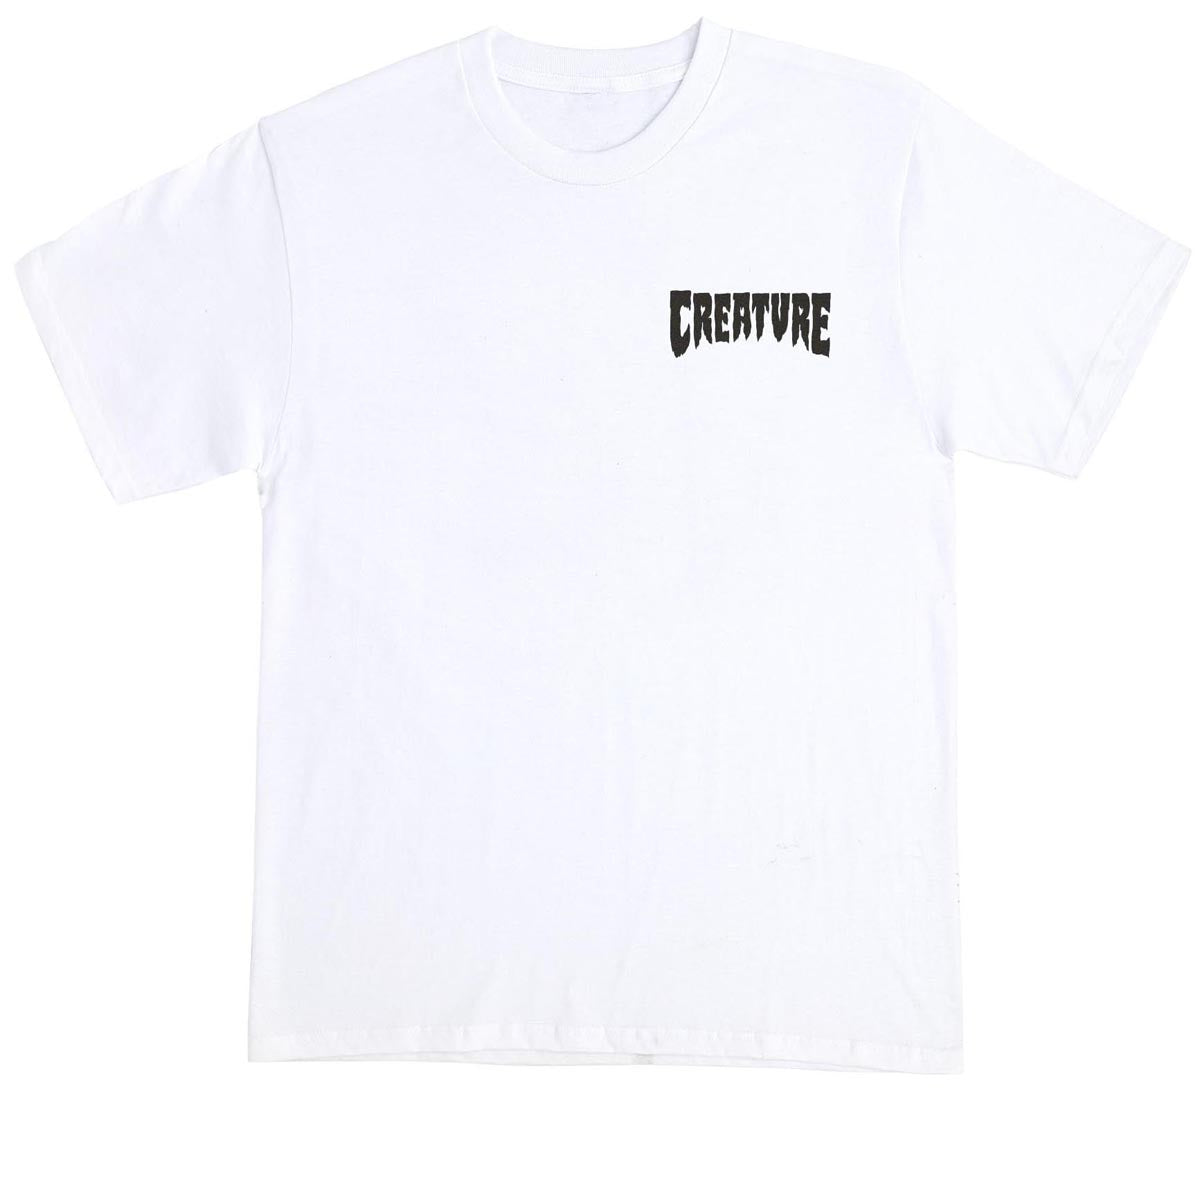 Creature Fiend Club Relic T-Shirt - White image 2